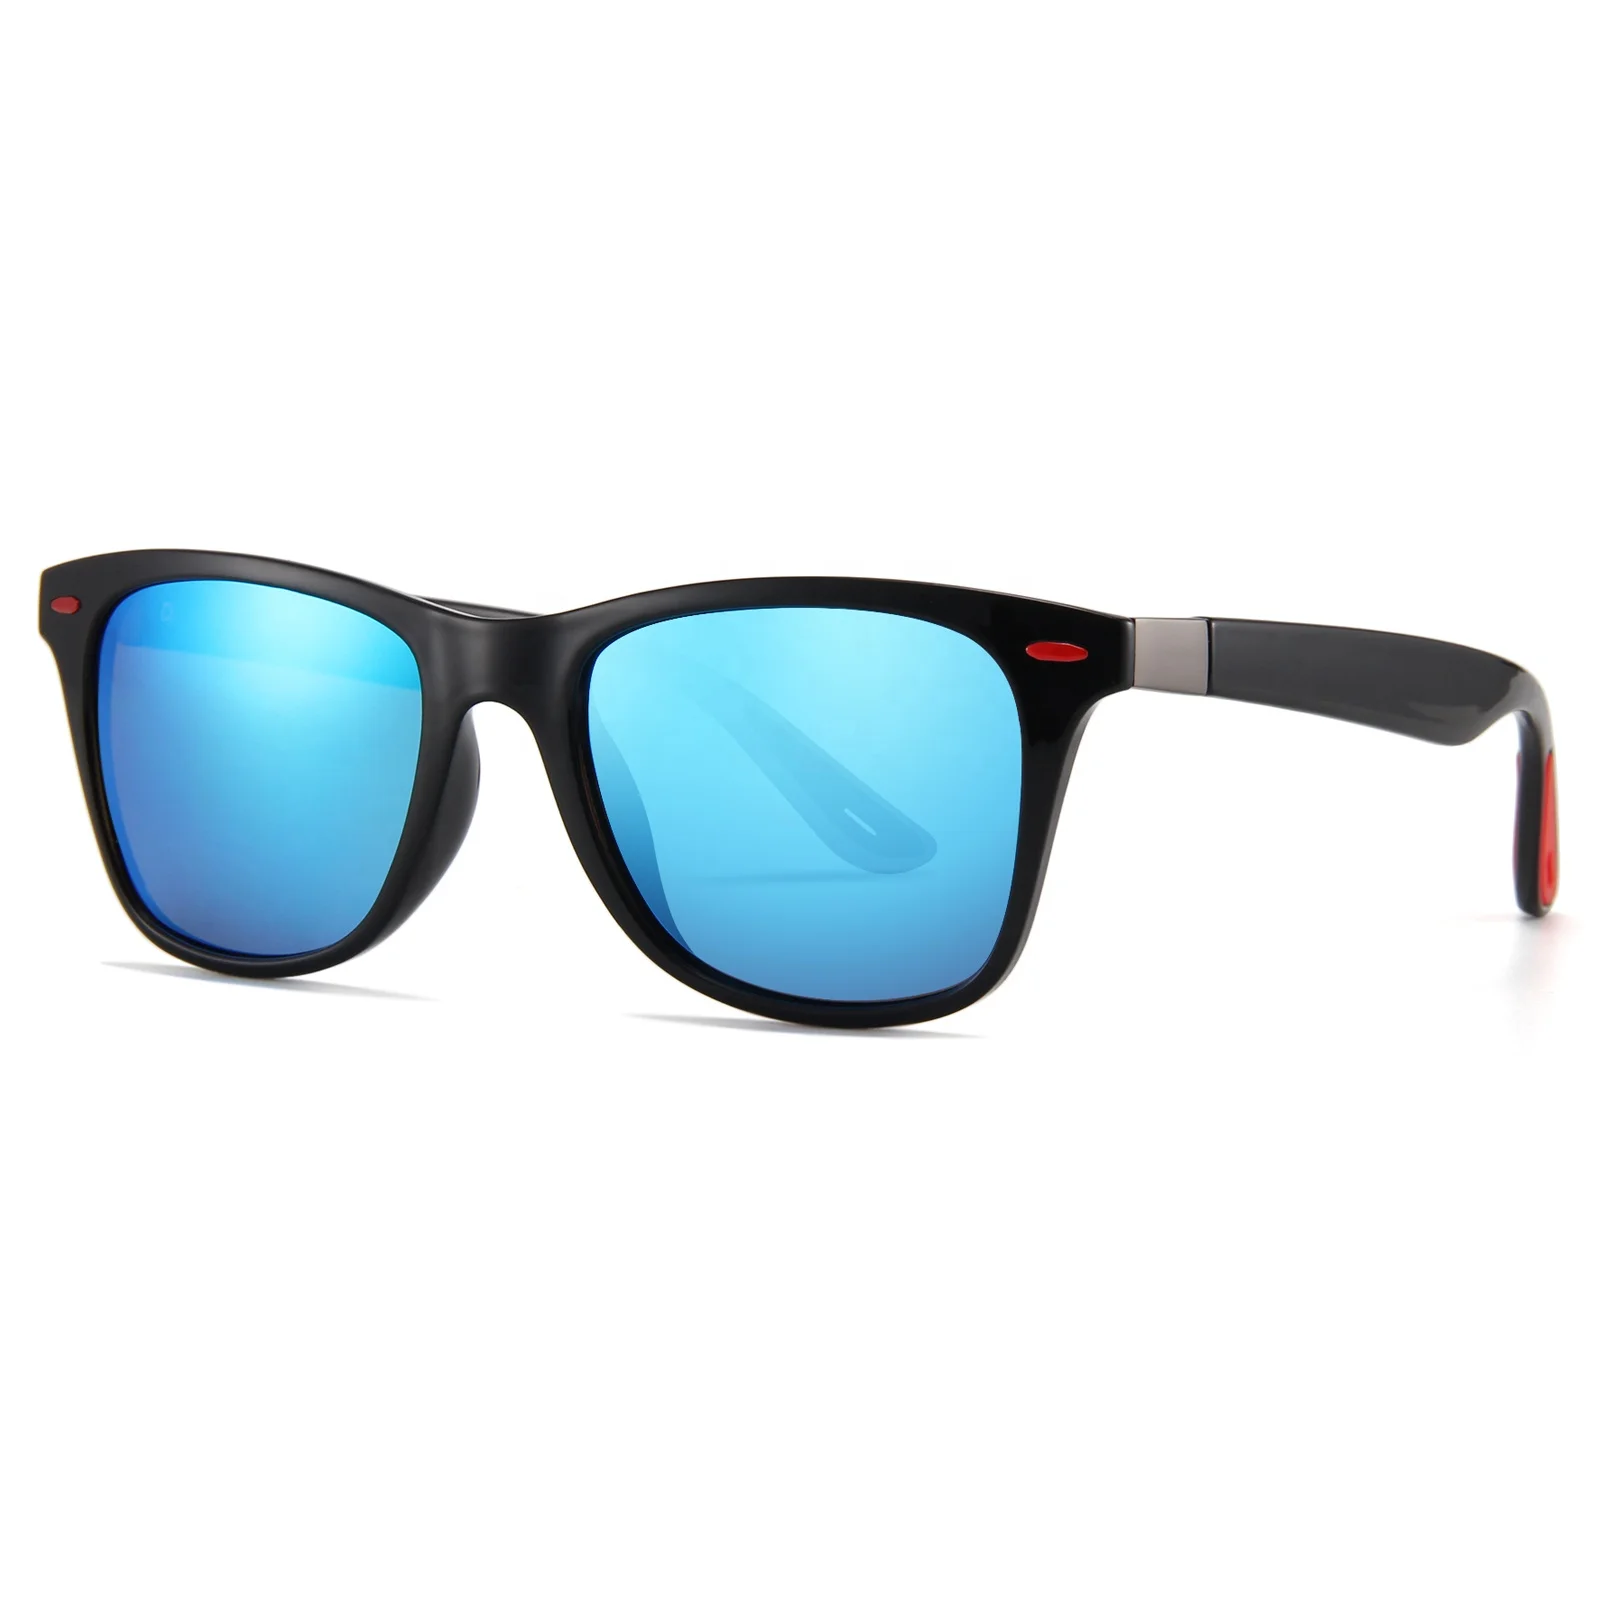 Quayside White Sports Sunglasses Polarized Red Mirror Cat 3 UV400 Lenses 